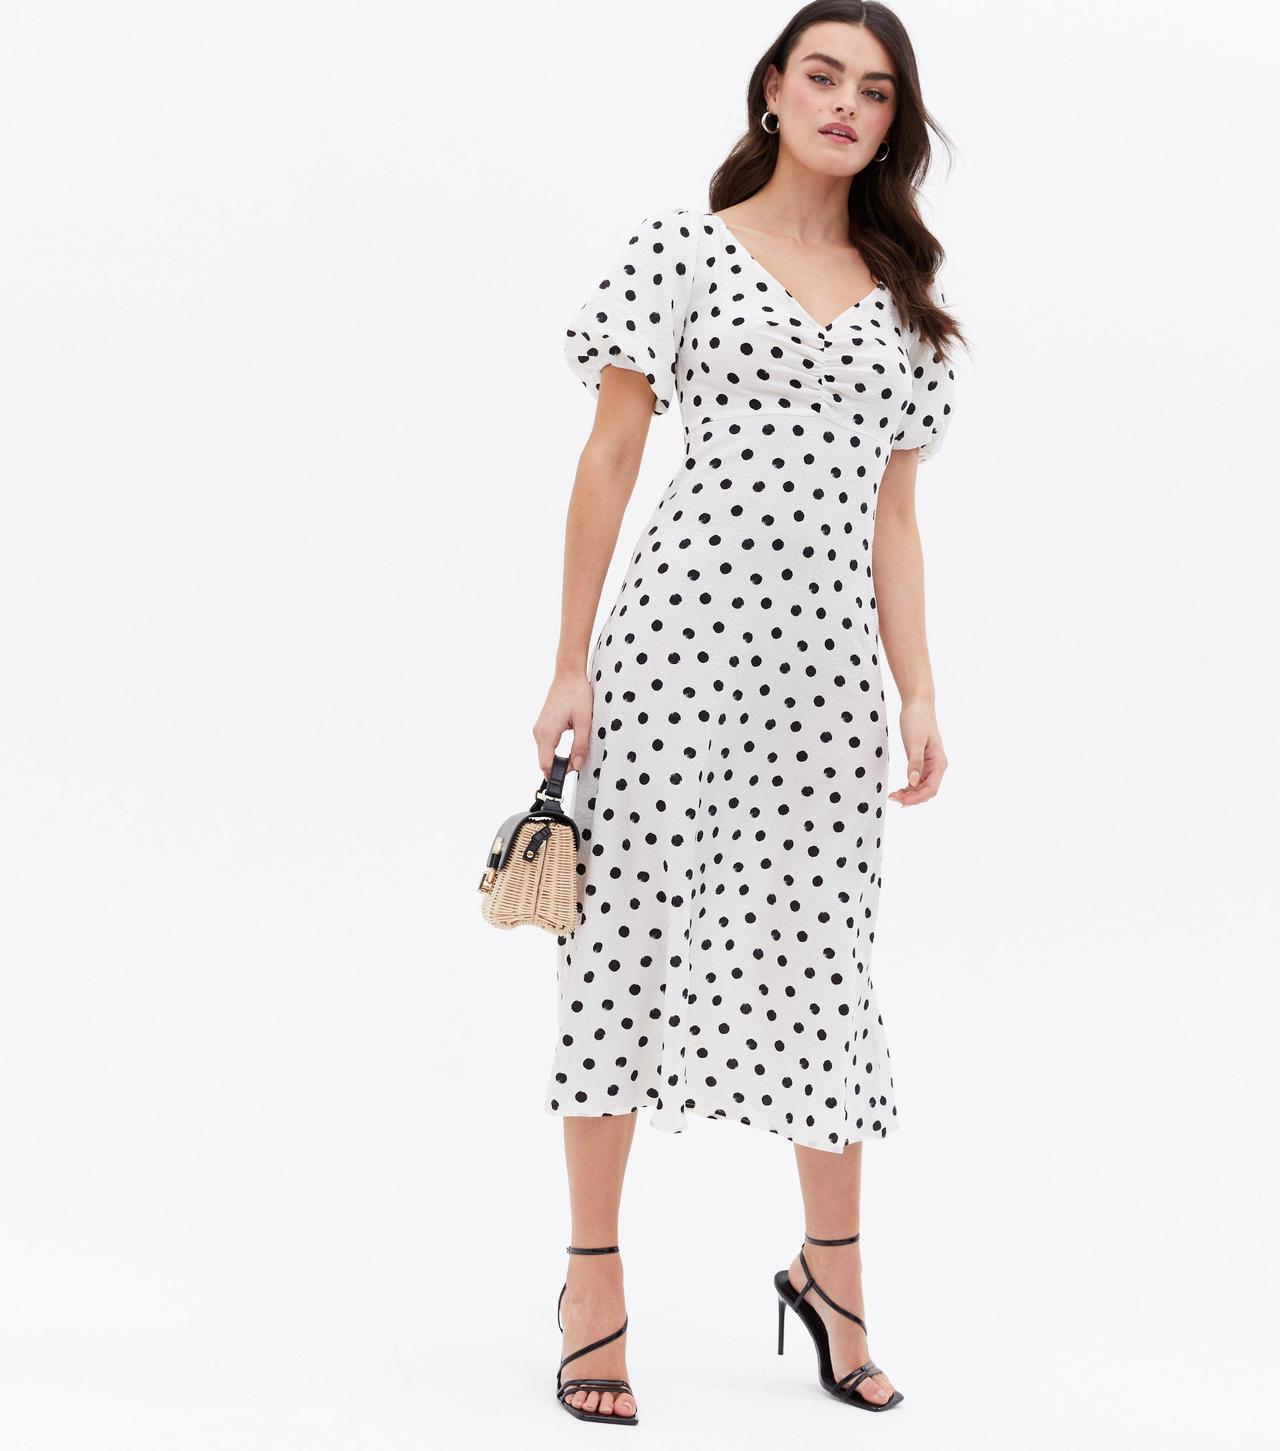 Model wearing a monochrome polka dot casual wedding dress